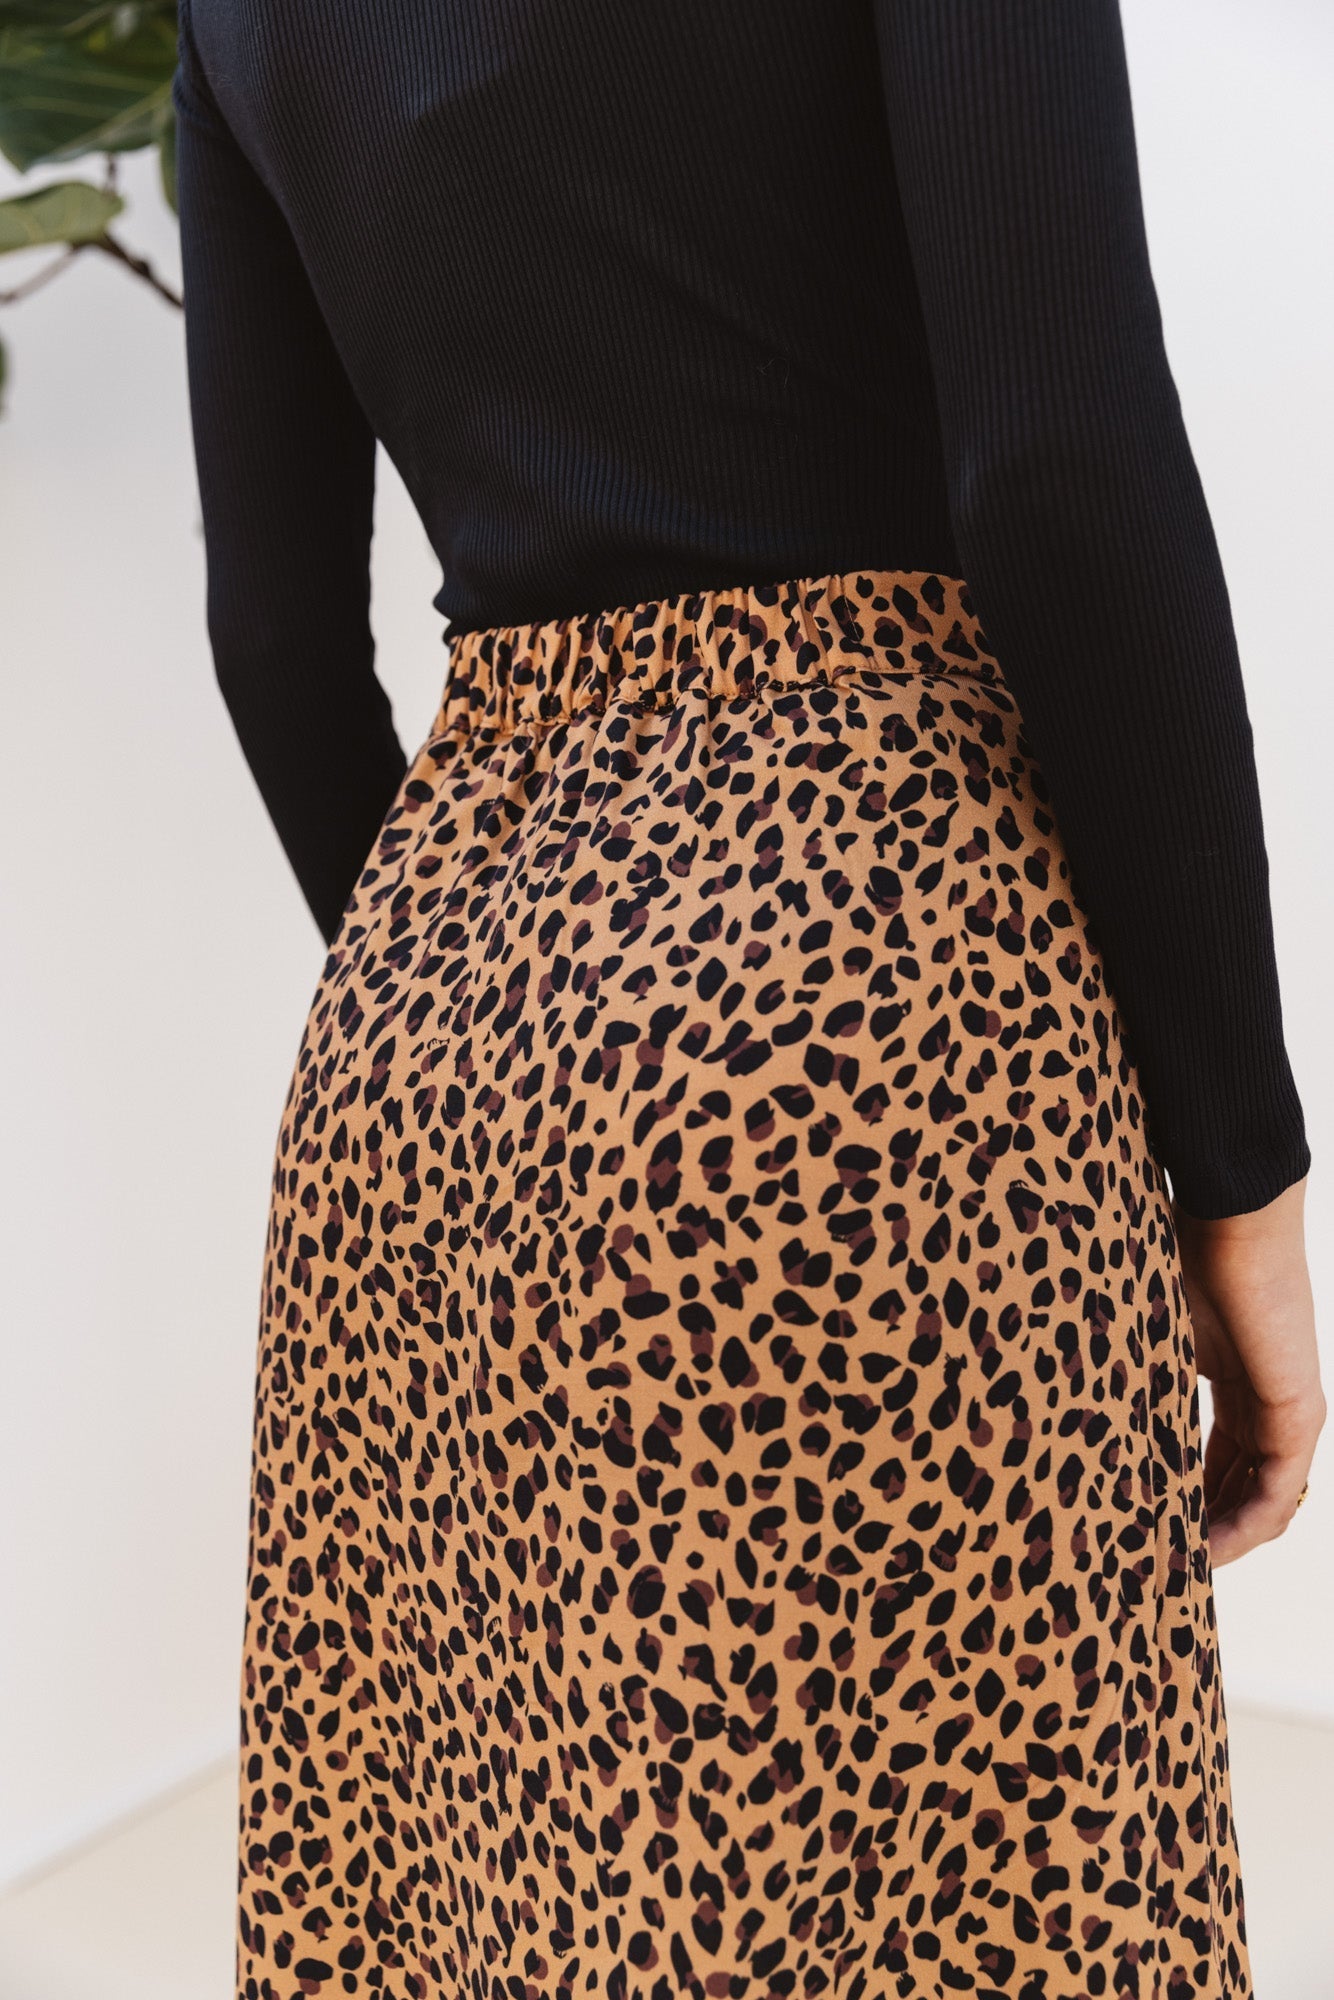 Sally leopard skirt (old)